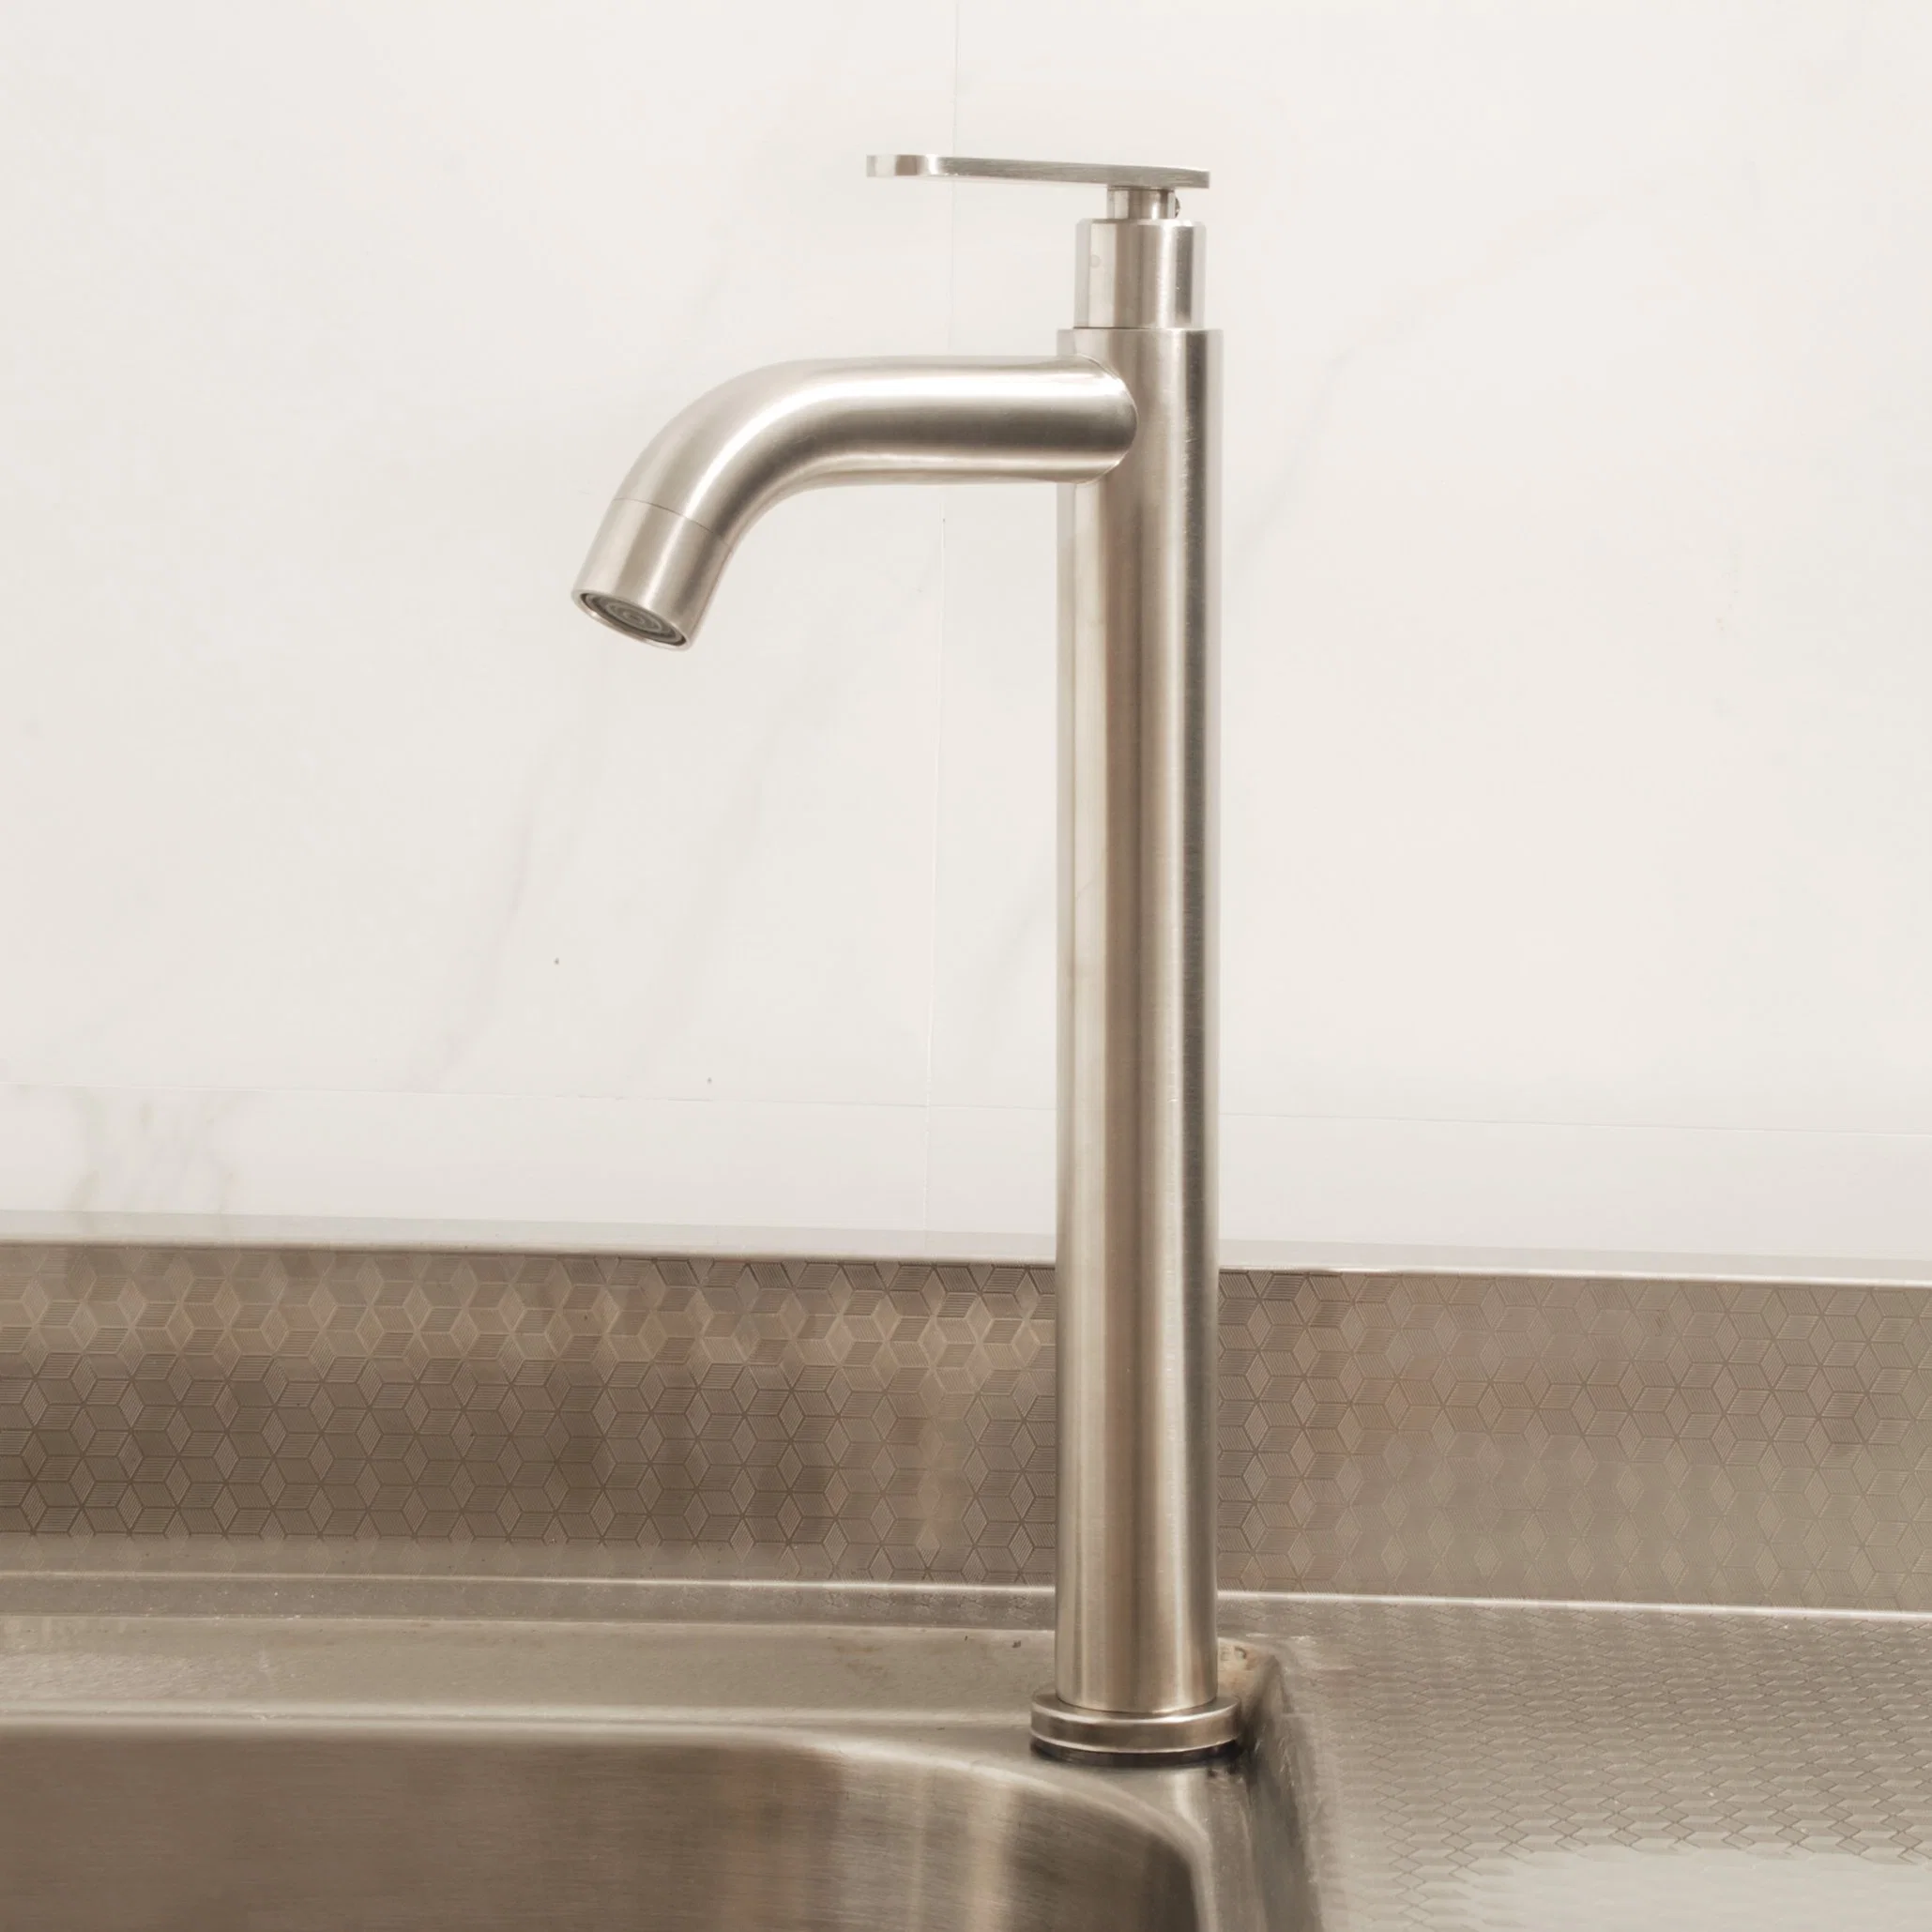 Factory Hot Sale Modern Basin Tap Faucet for Bathroom Kitchen Lavatory